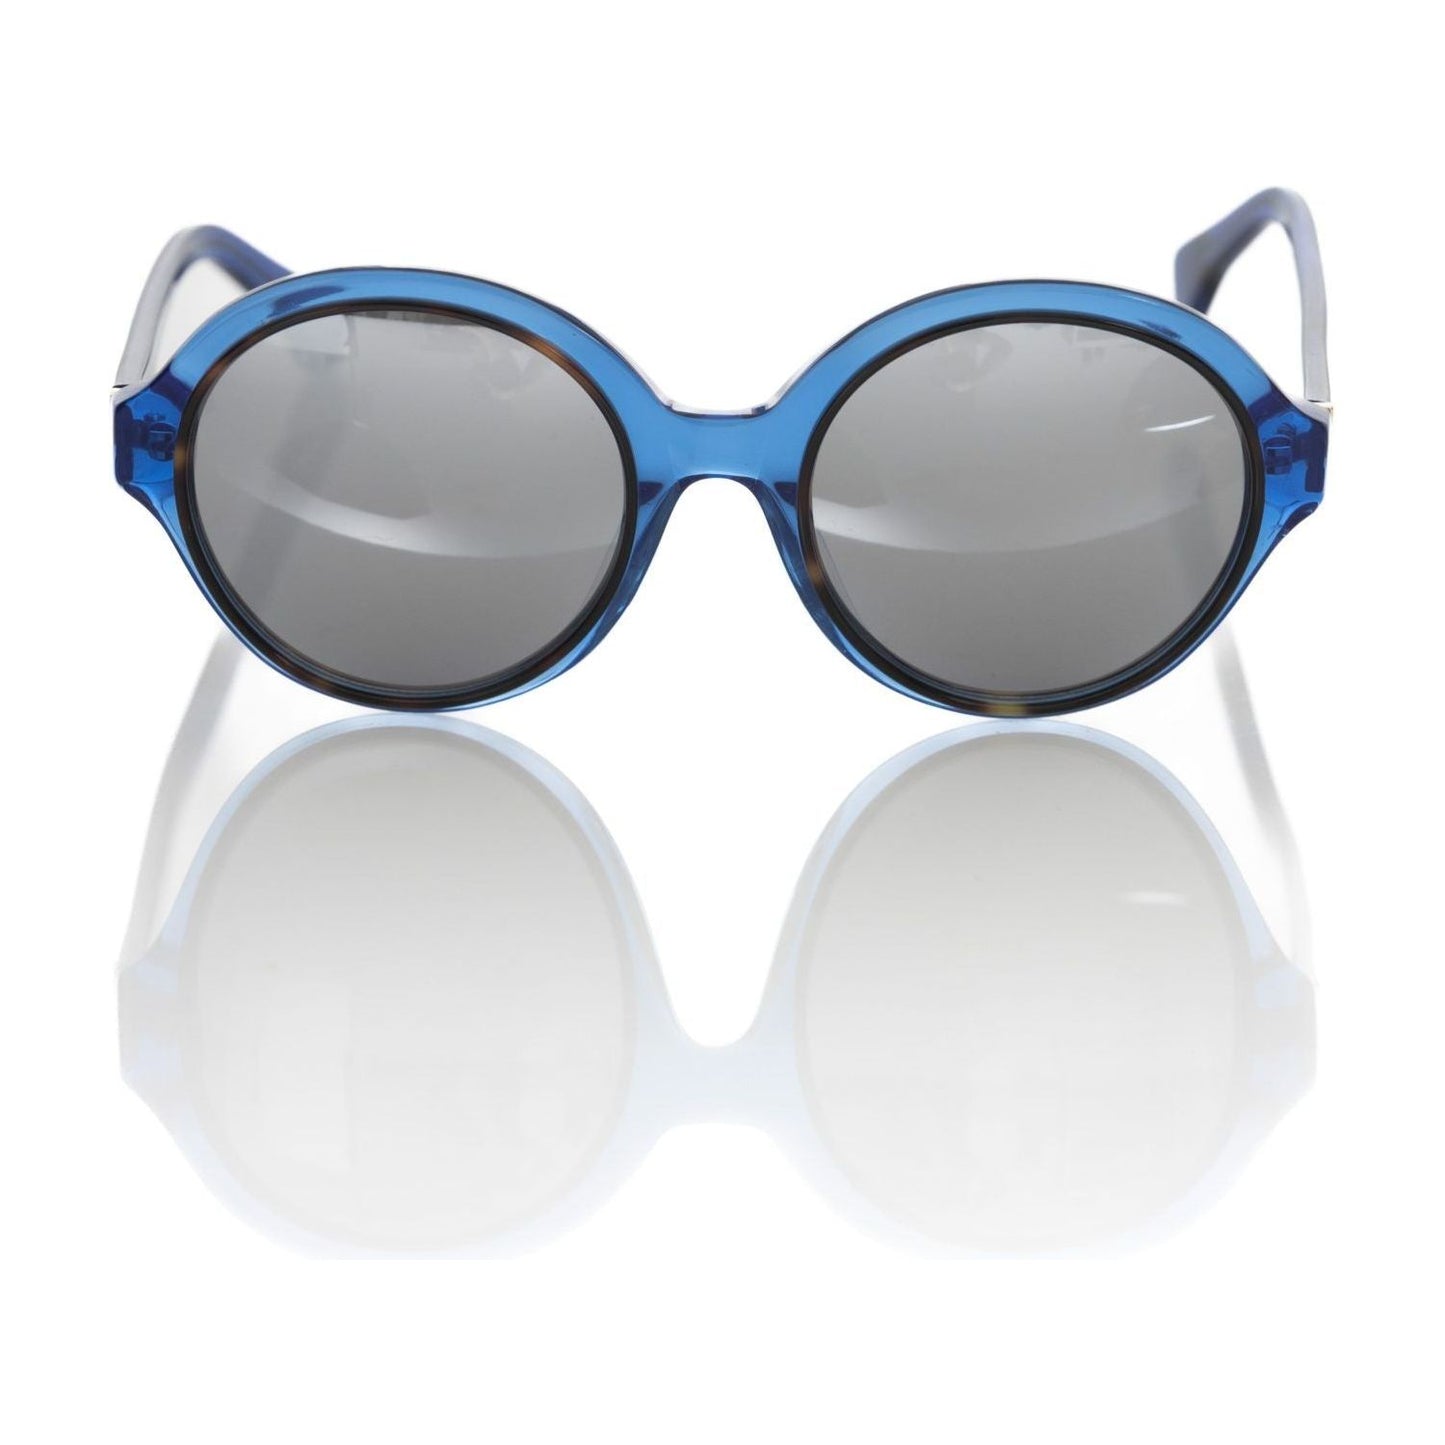 Frankie Morello Chic Transparent Blue Round Sunglasses blue-acetate-sunglasses